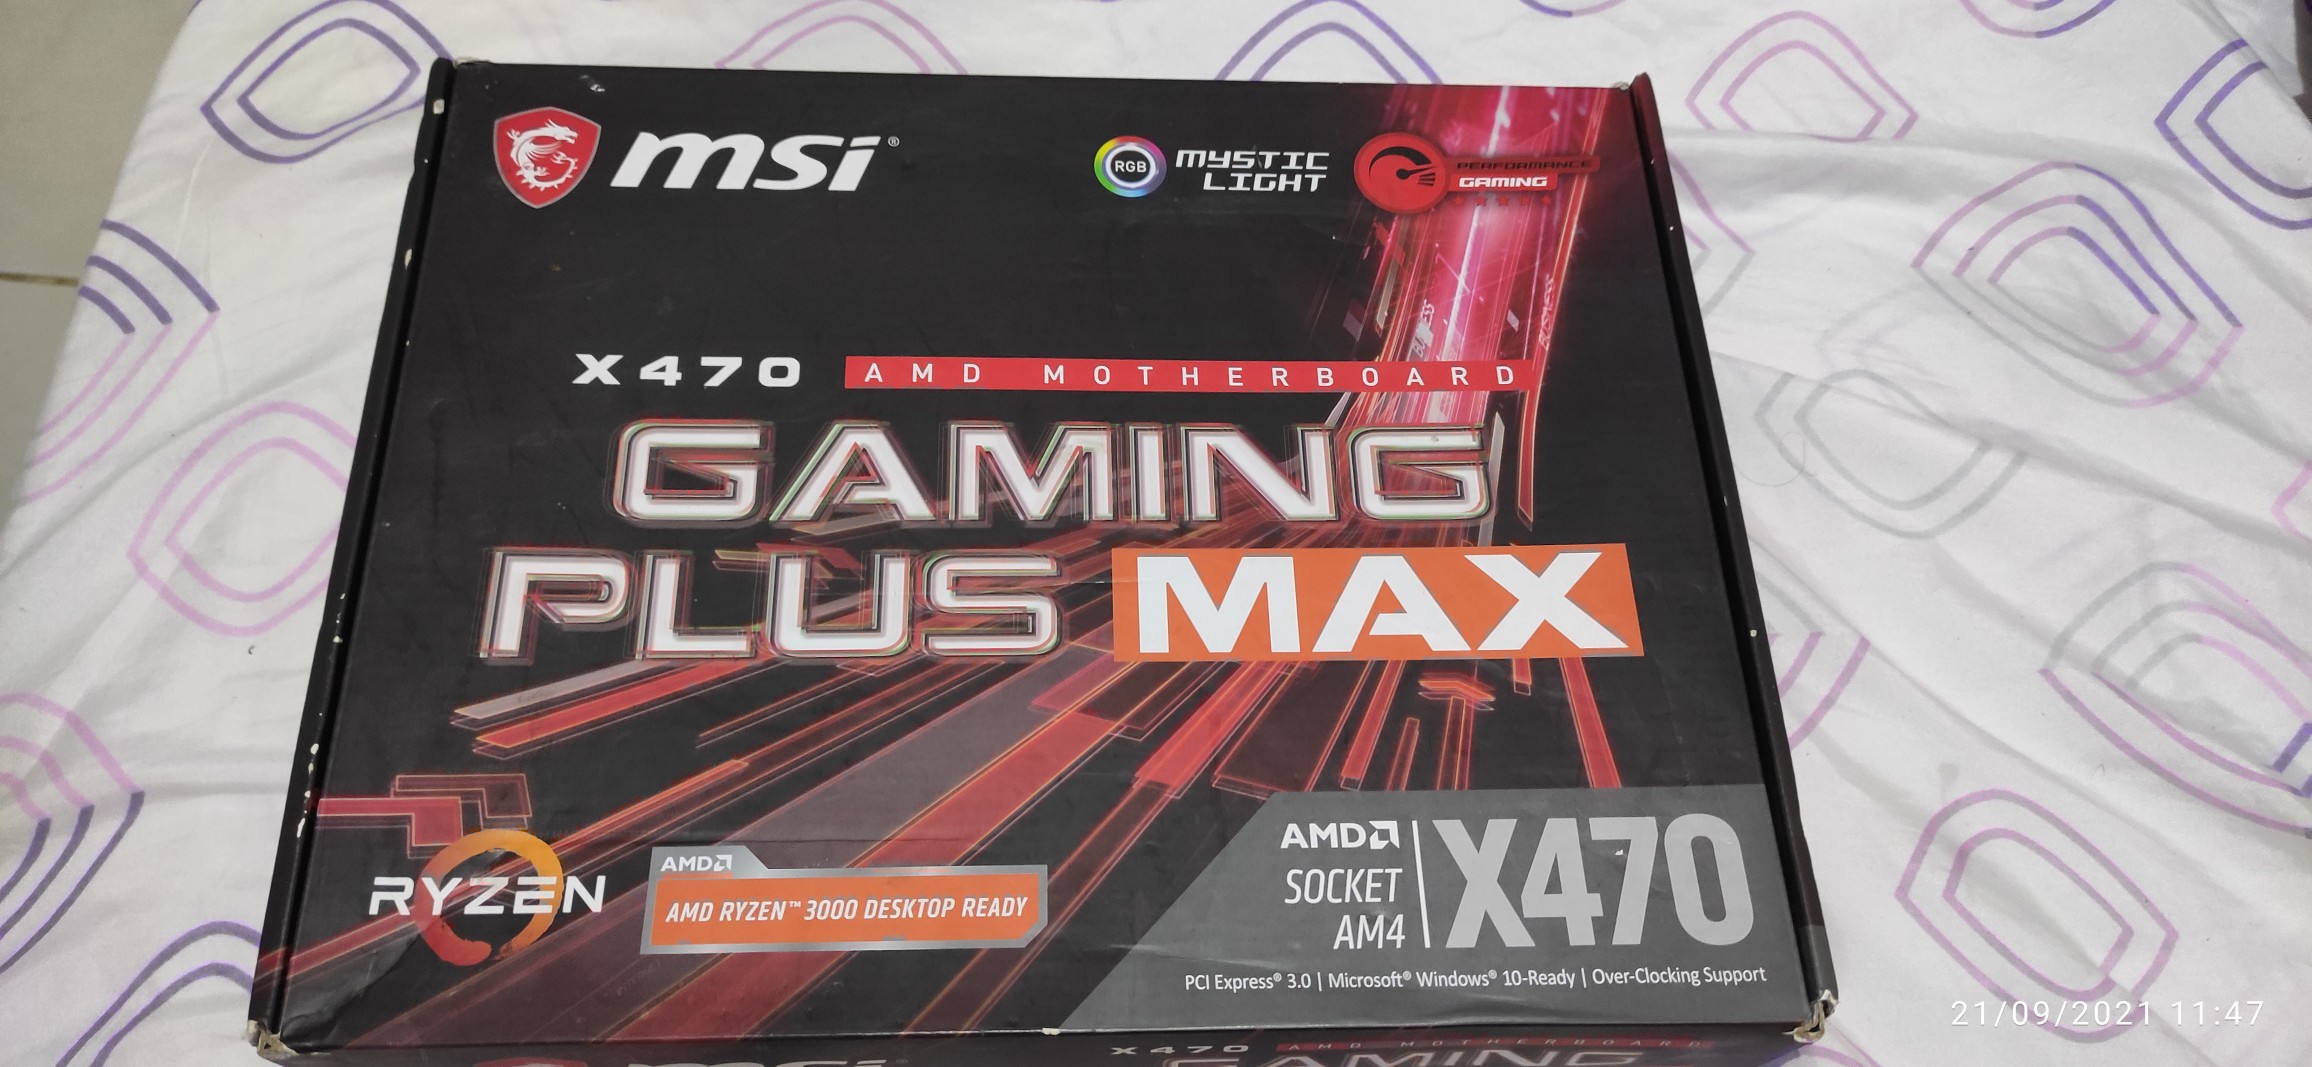 computadoras y laptops - Motherboard x470 MSI gaming plus max